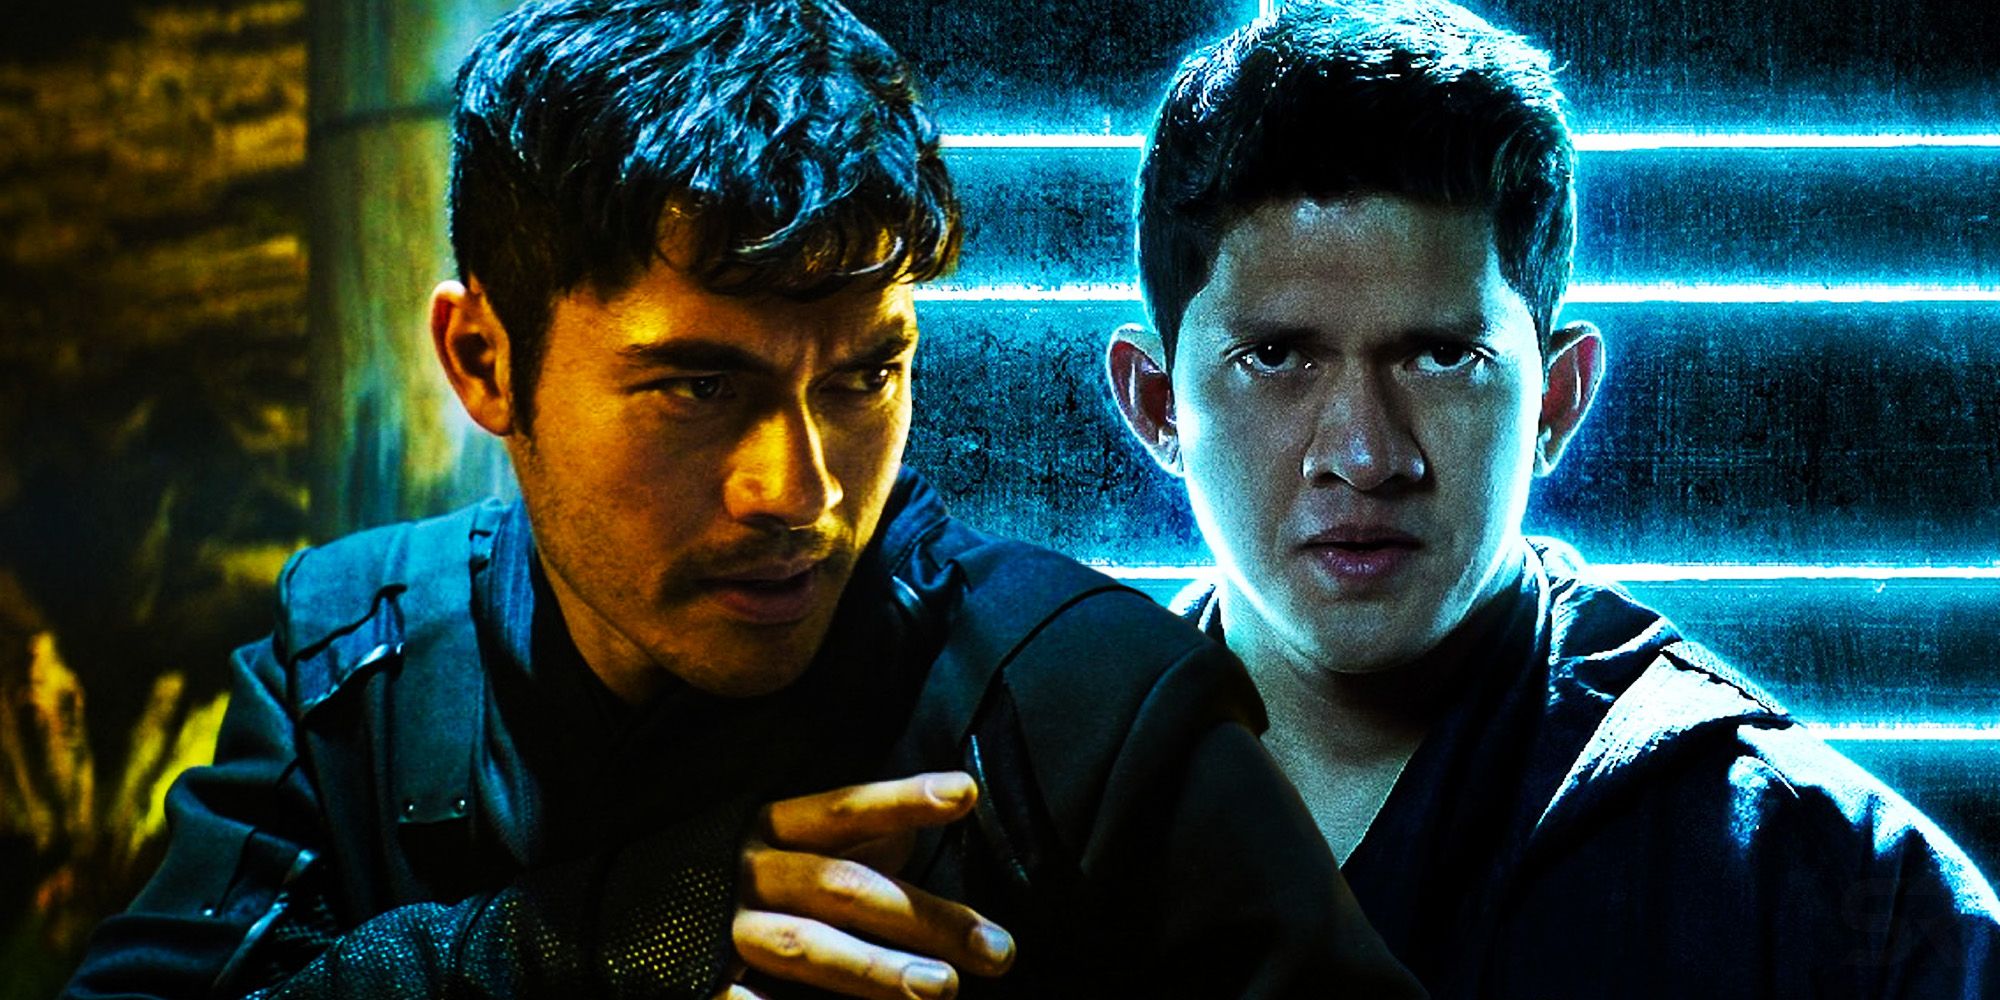 Snake eyes gi joe origins Confirms Iko Uwais is A Martial Arts Movie Legend